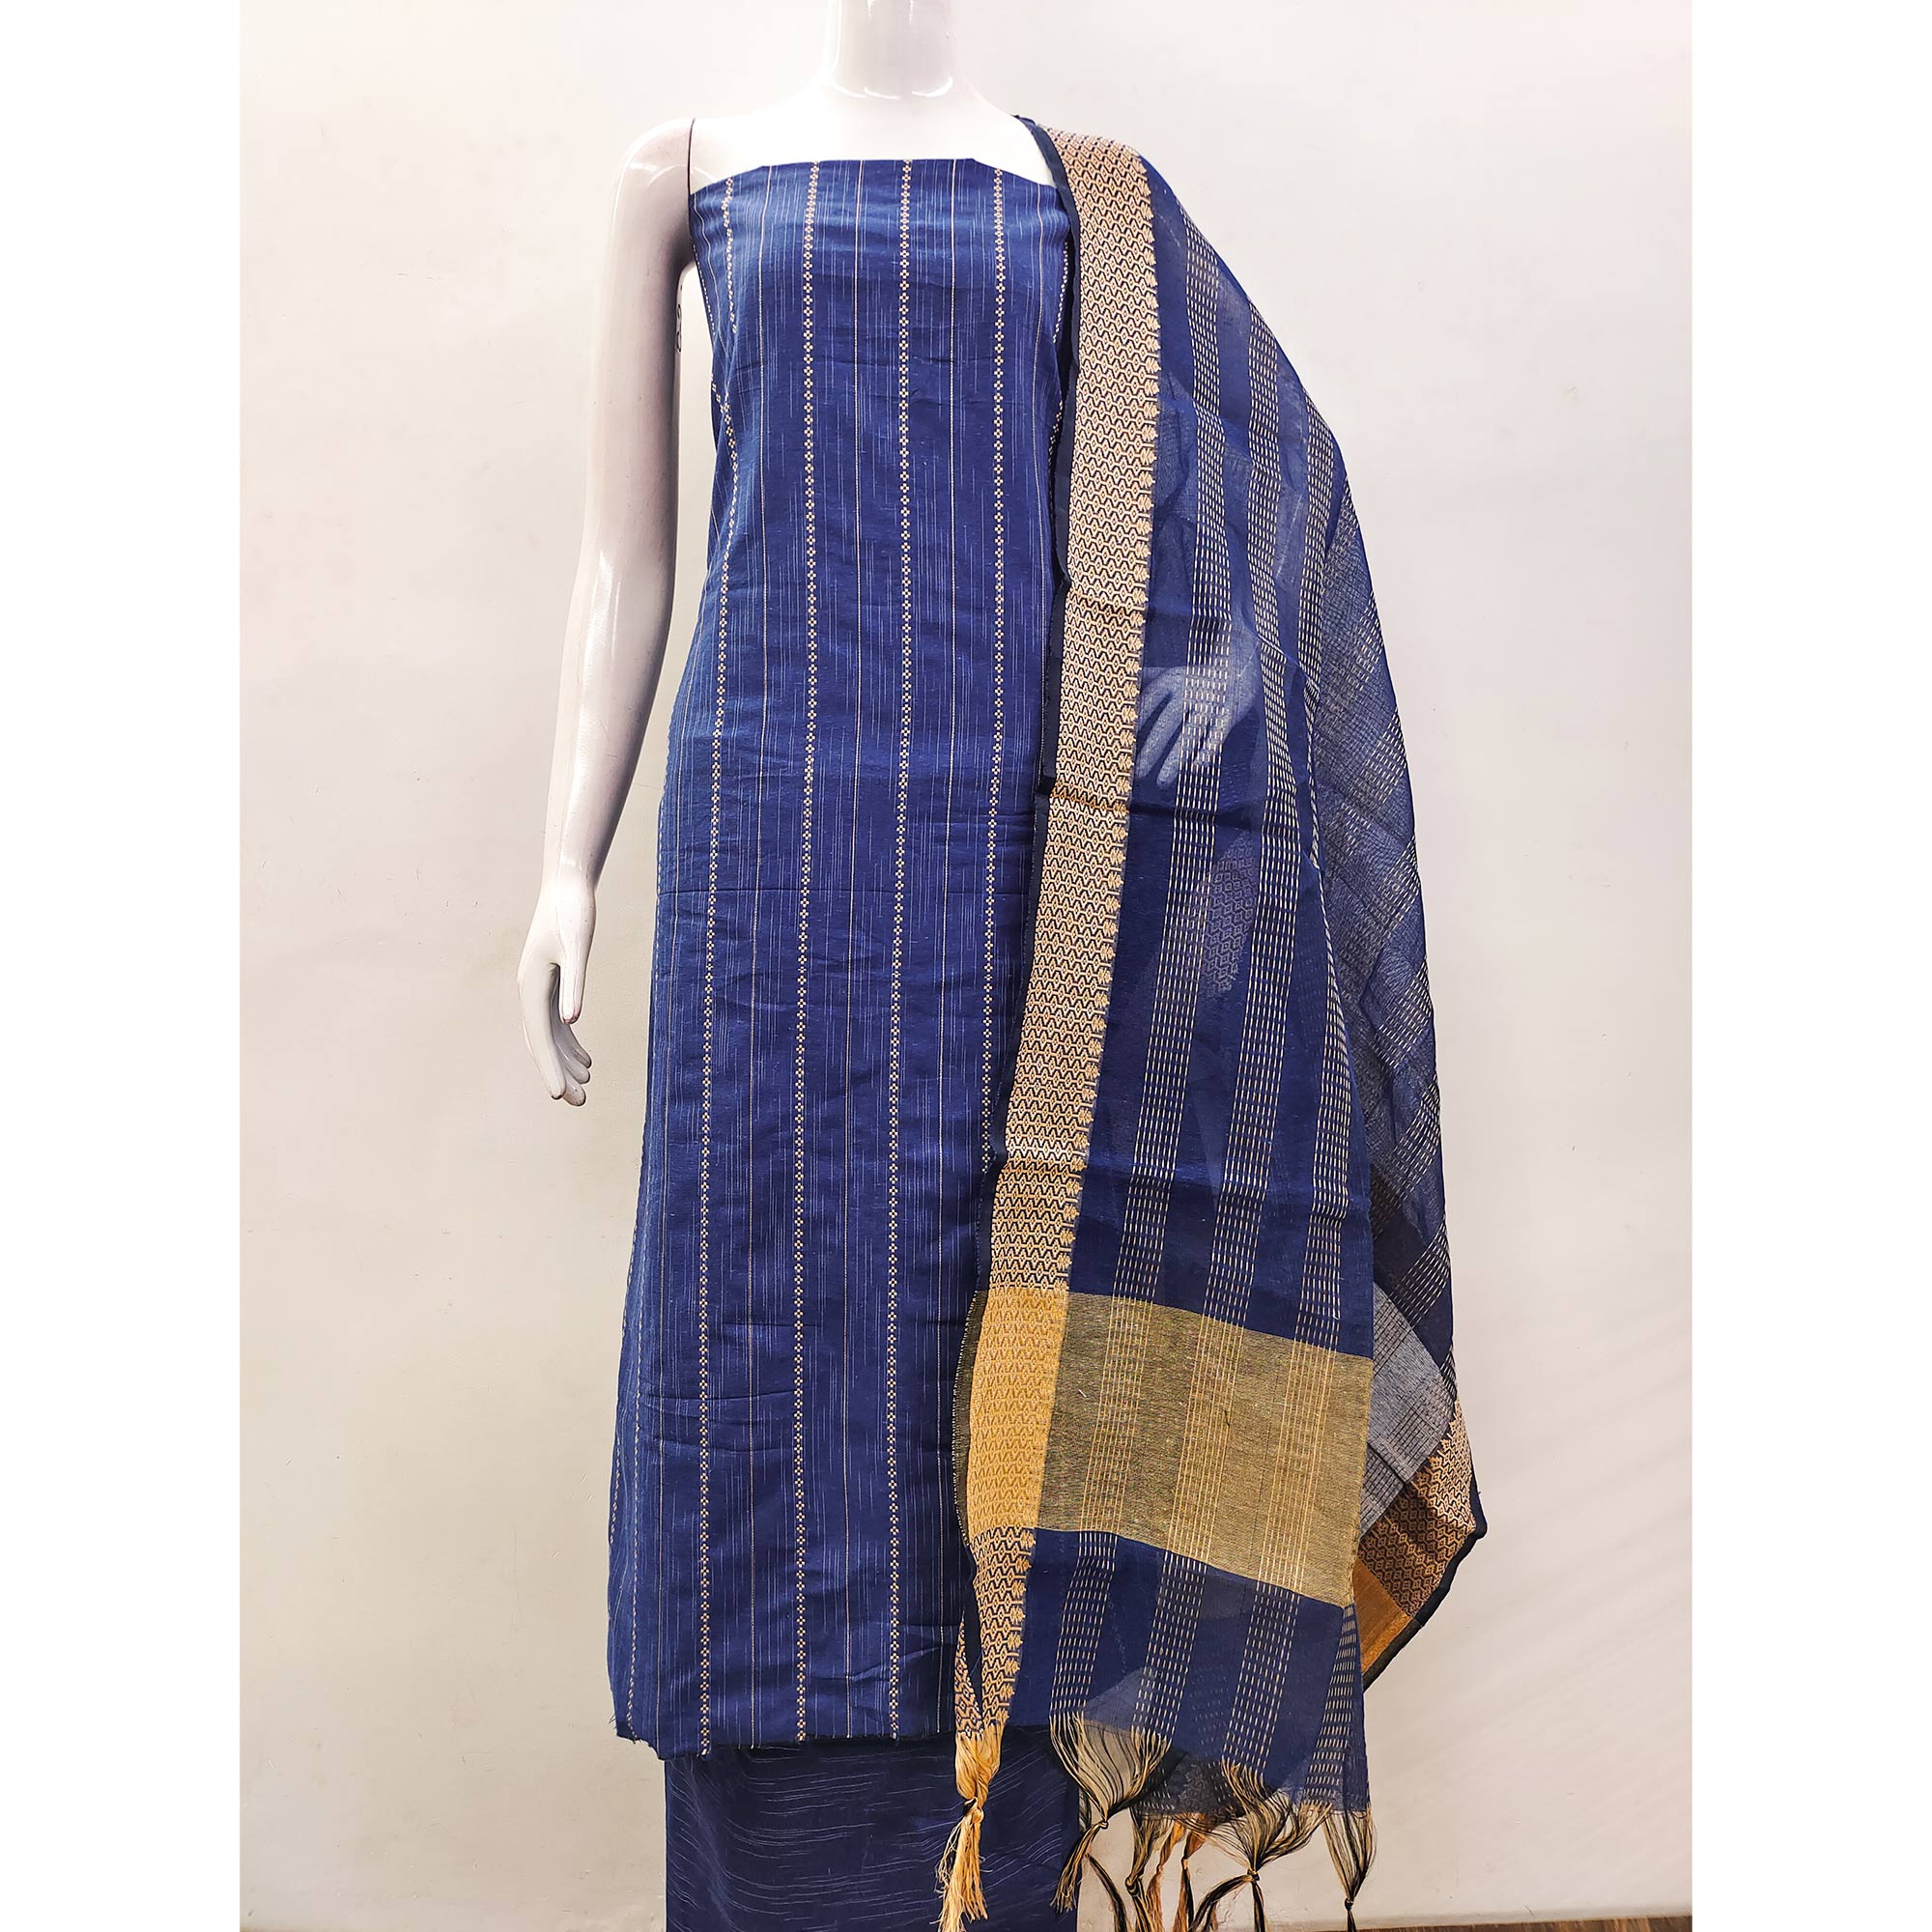 Royal Blue Woven Cotton Blend Dress Material